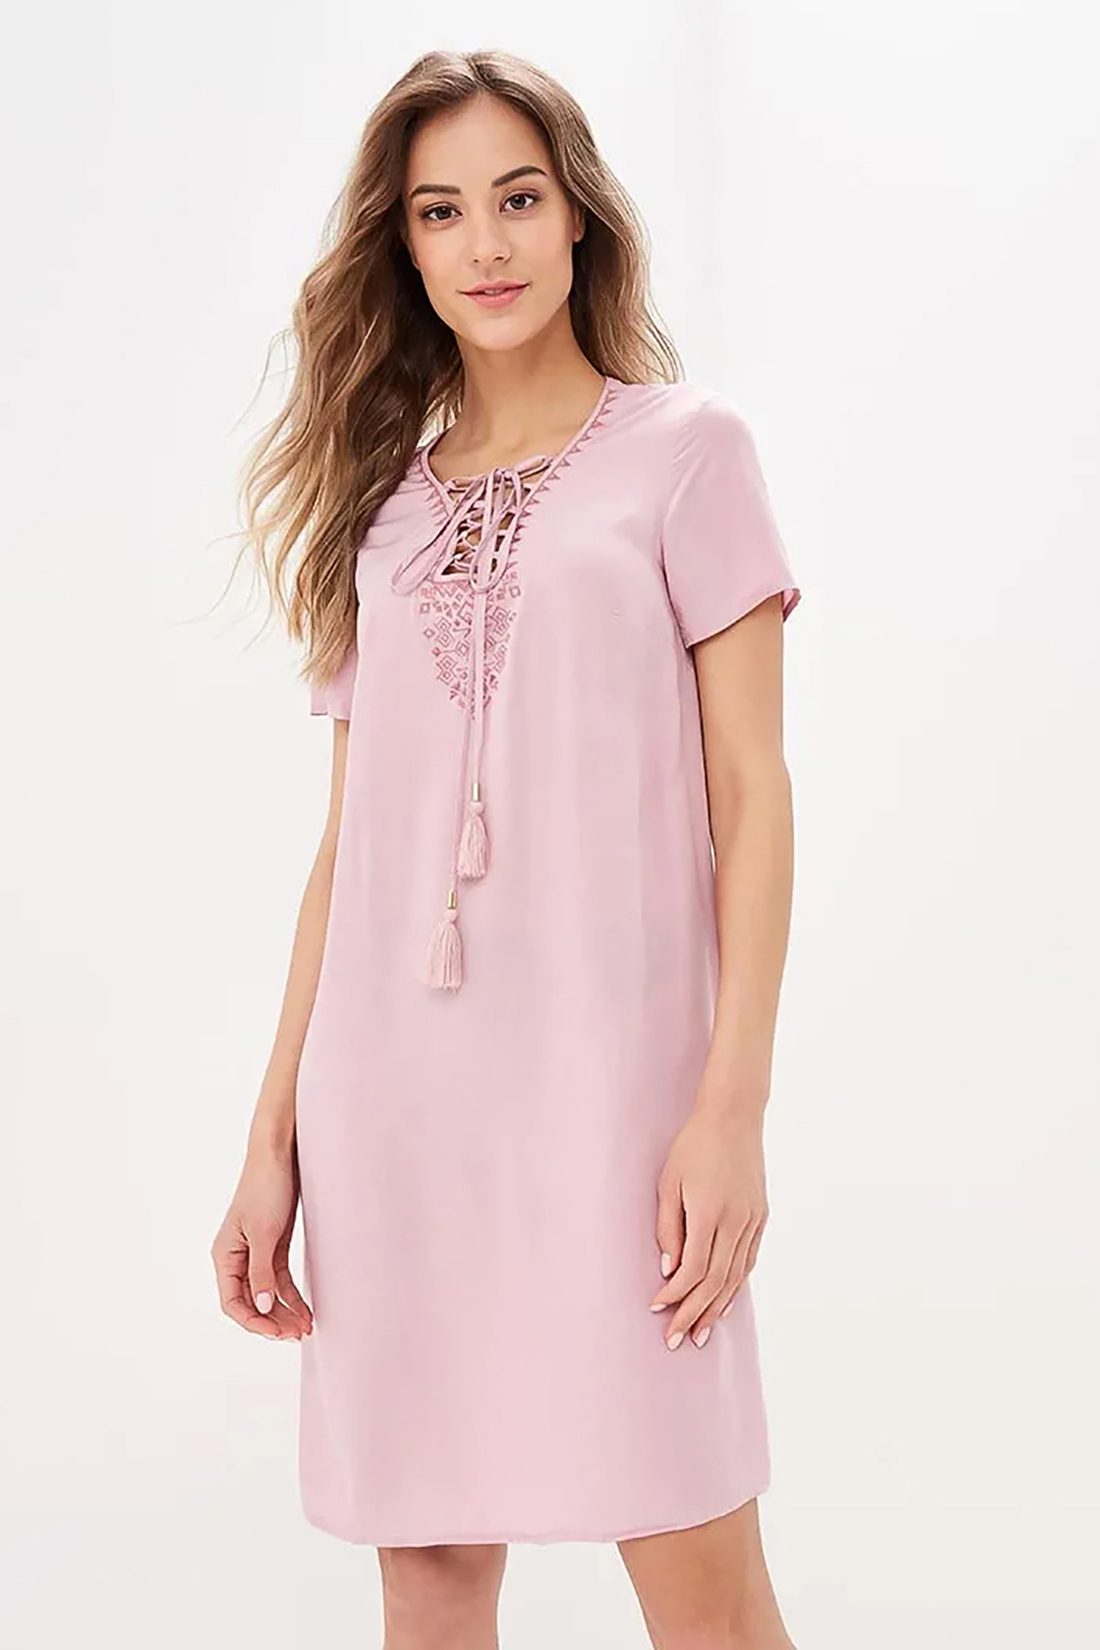 Платье со шнуровкой (арт. baon B459035), размер XS, цвет розовый Платье со шнуровкой (арт. baon B459035) - фото 3